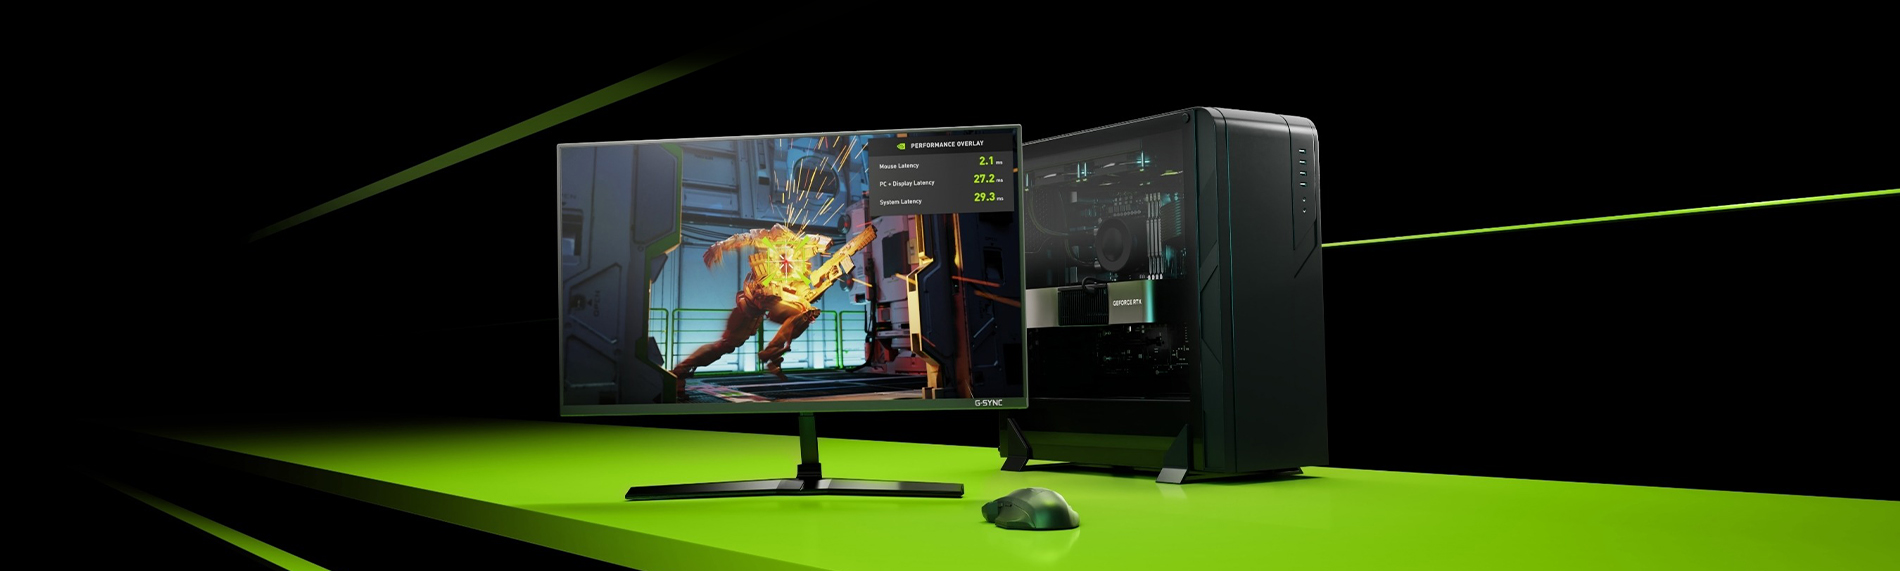 Nvidia Geforcertx30 Gamingdesktops 03.10.reflex